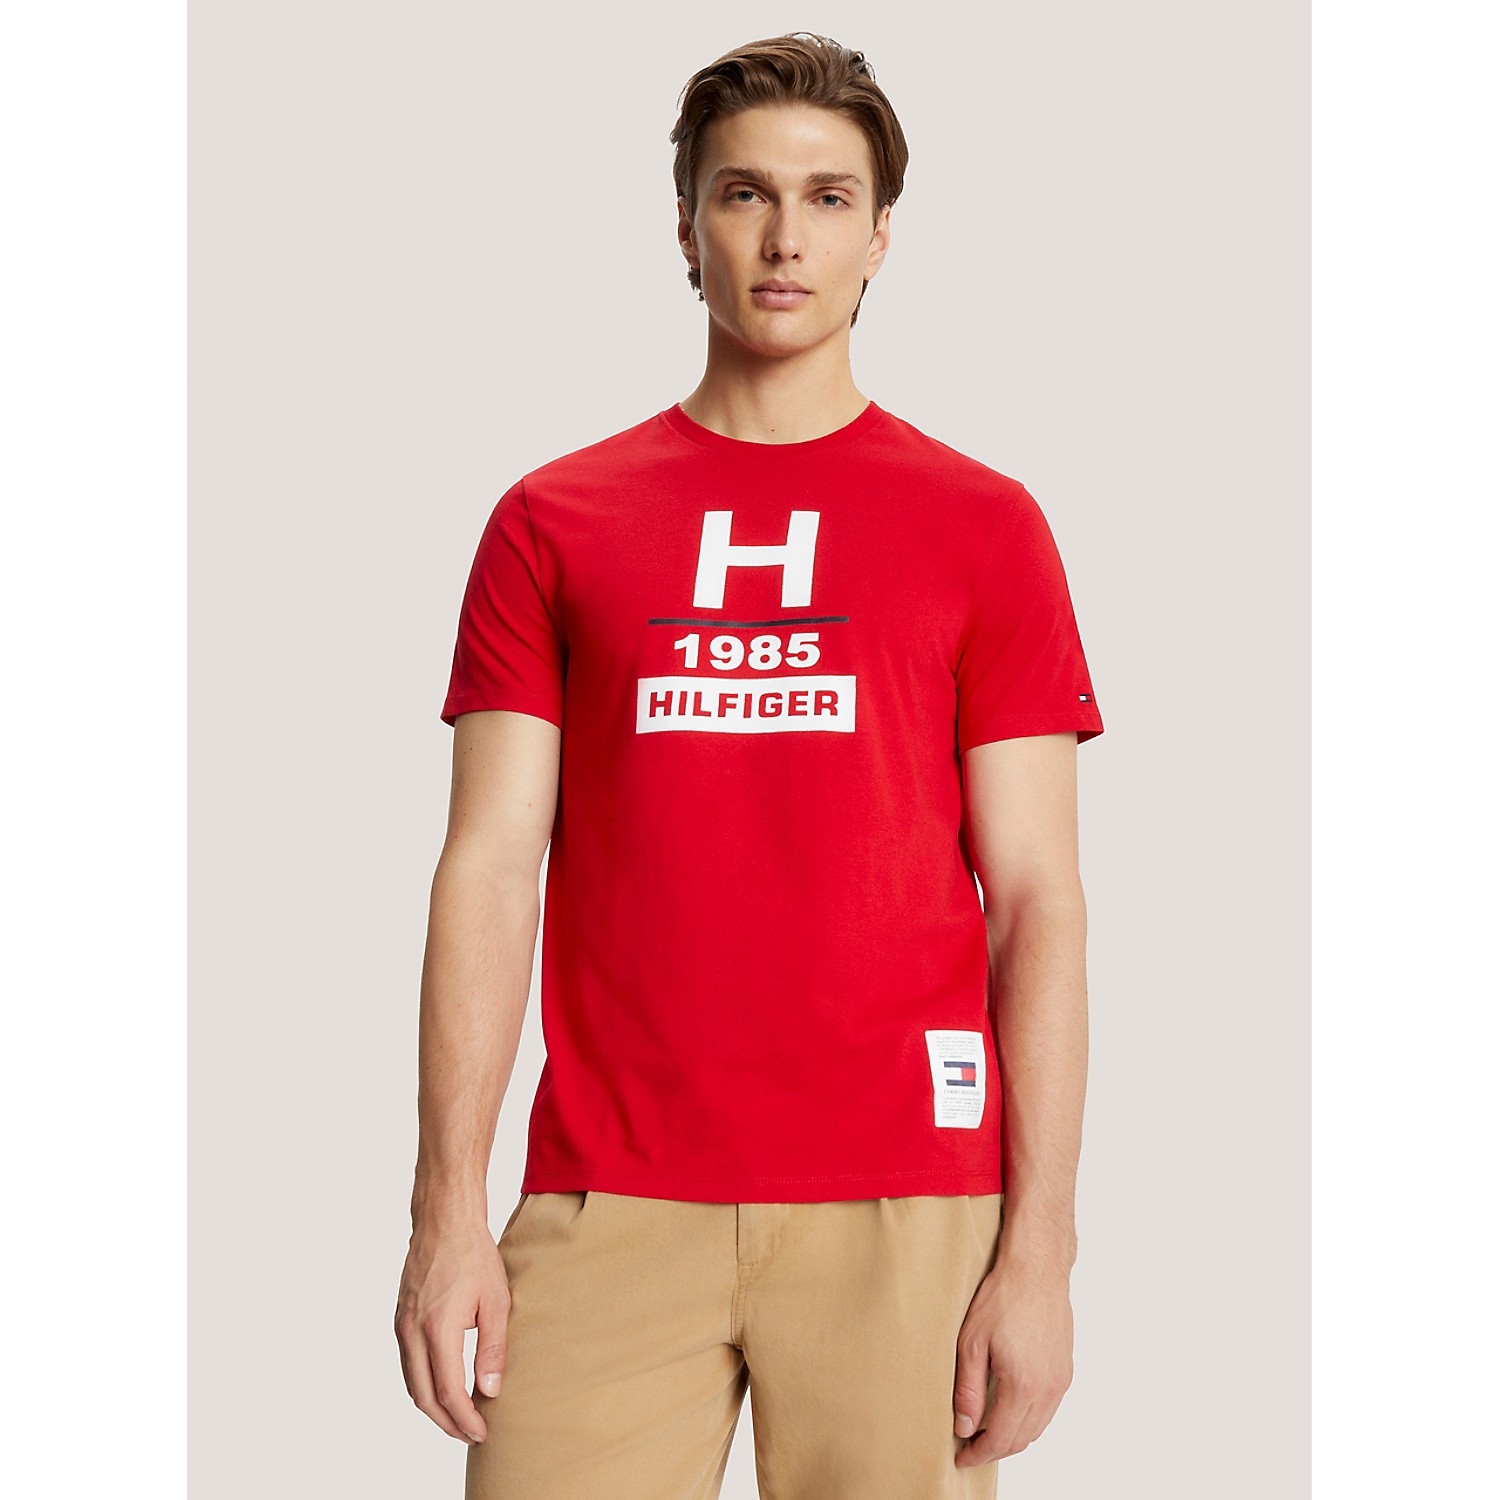 TOMMY HILFIGER Hilfiger 85 T-Shirt